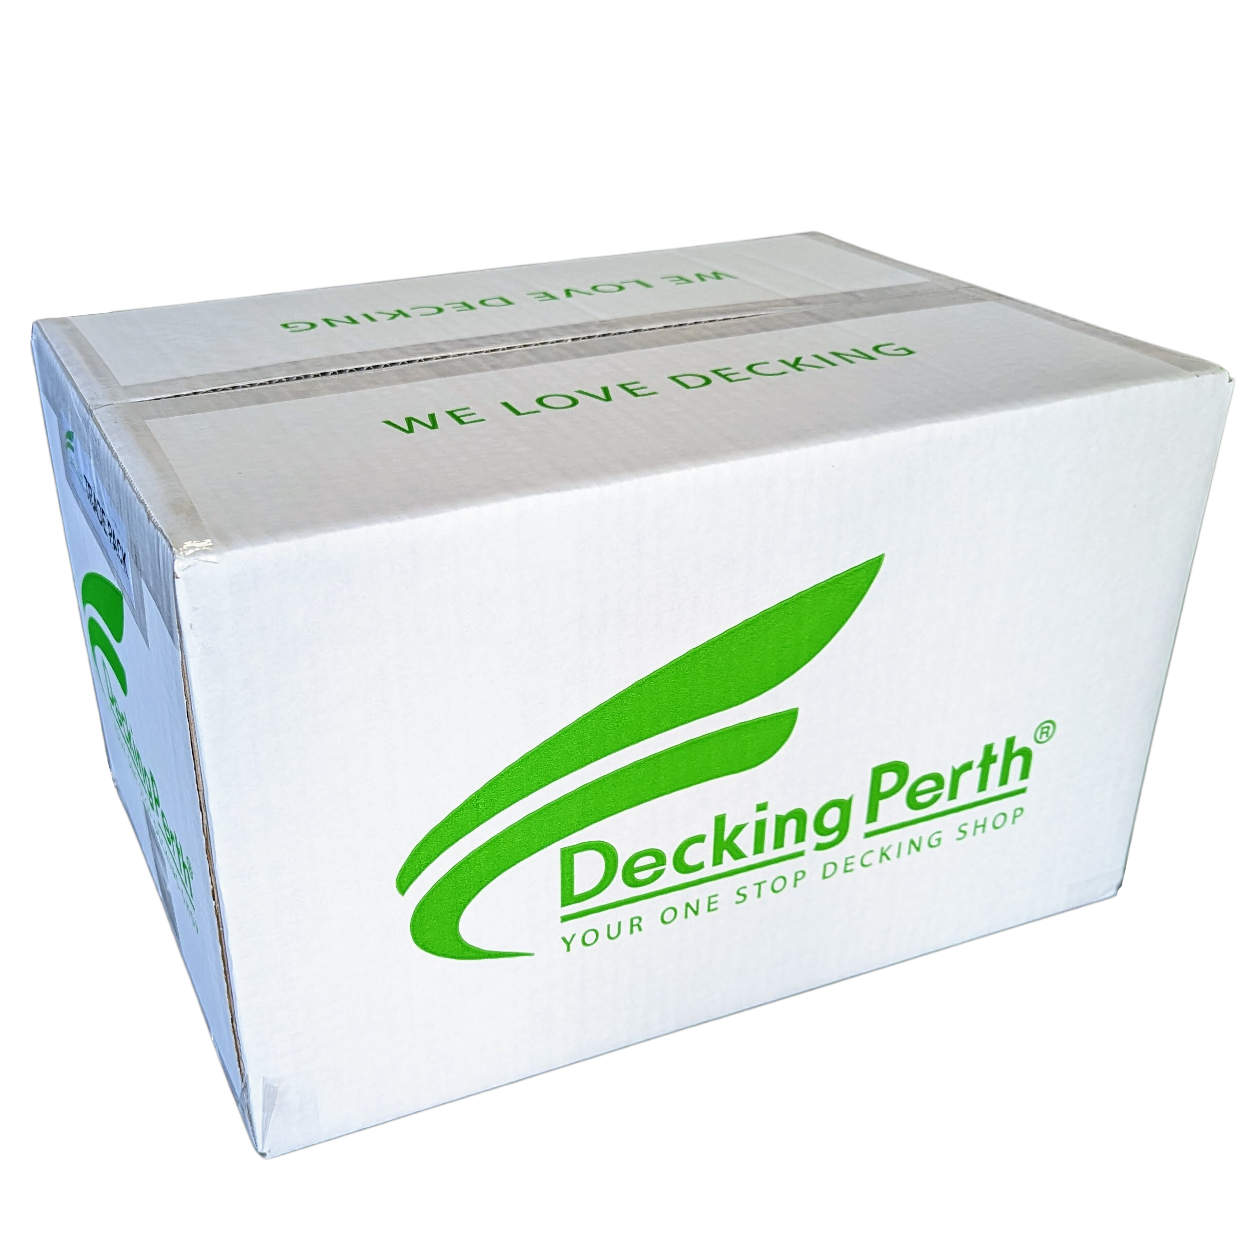 Decking_Perth_Trade_Pack